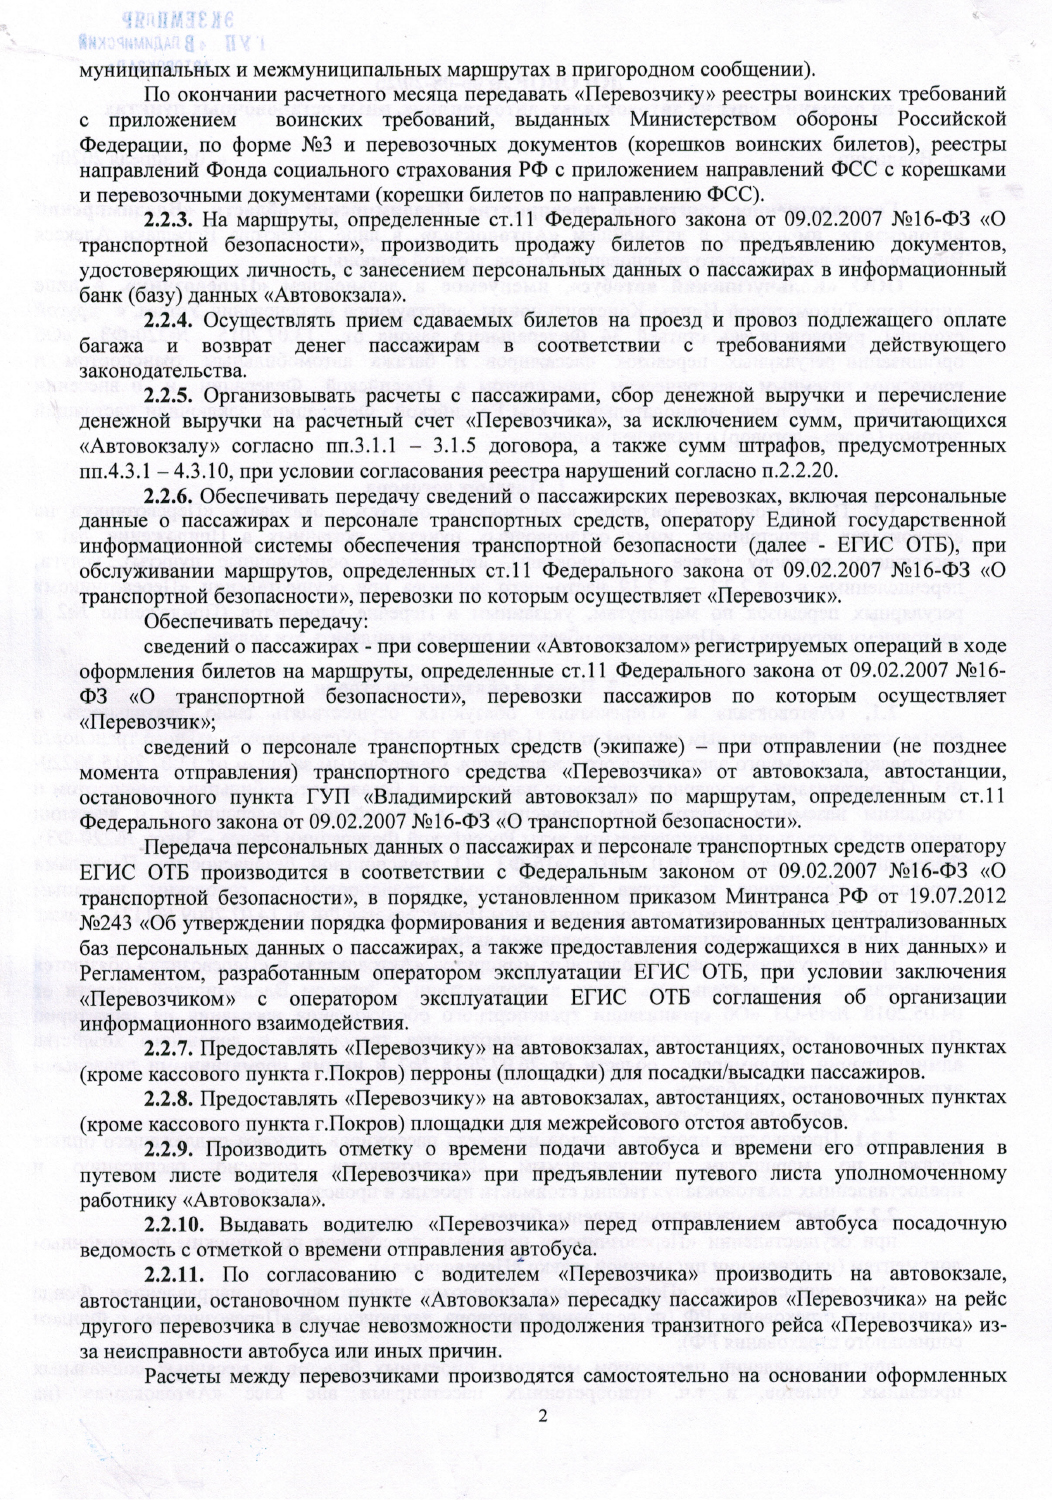 Договор ГУП владимиский вокзал-2.jpg